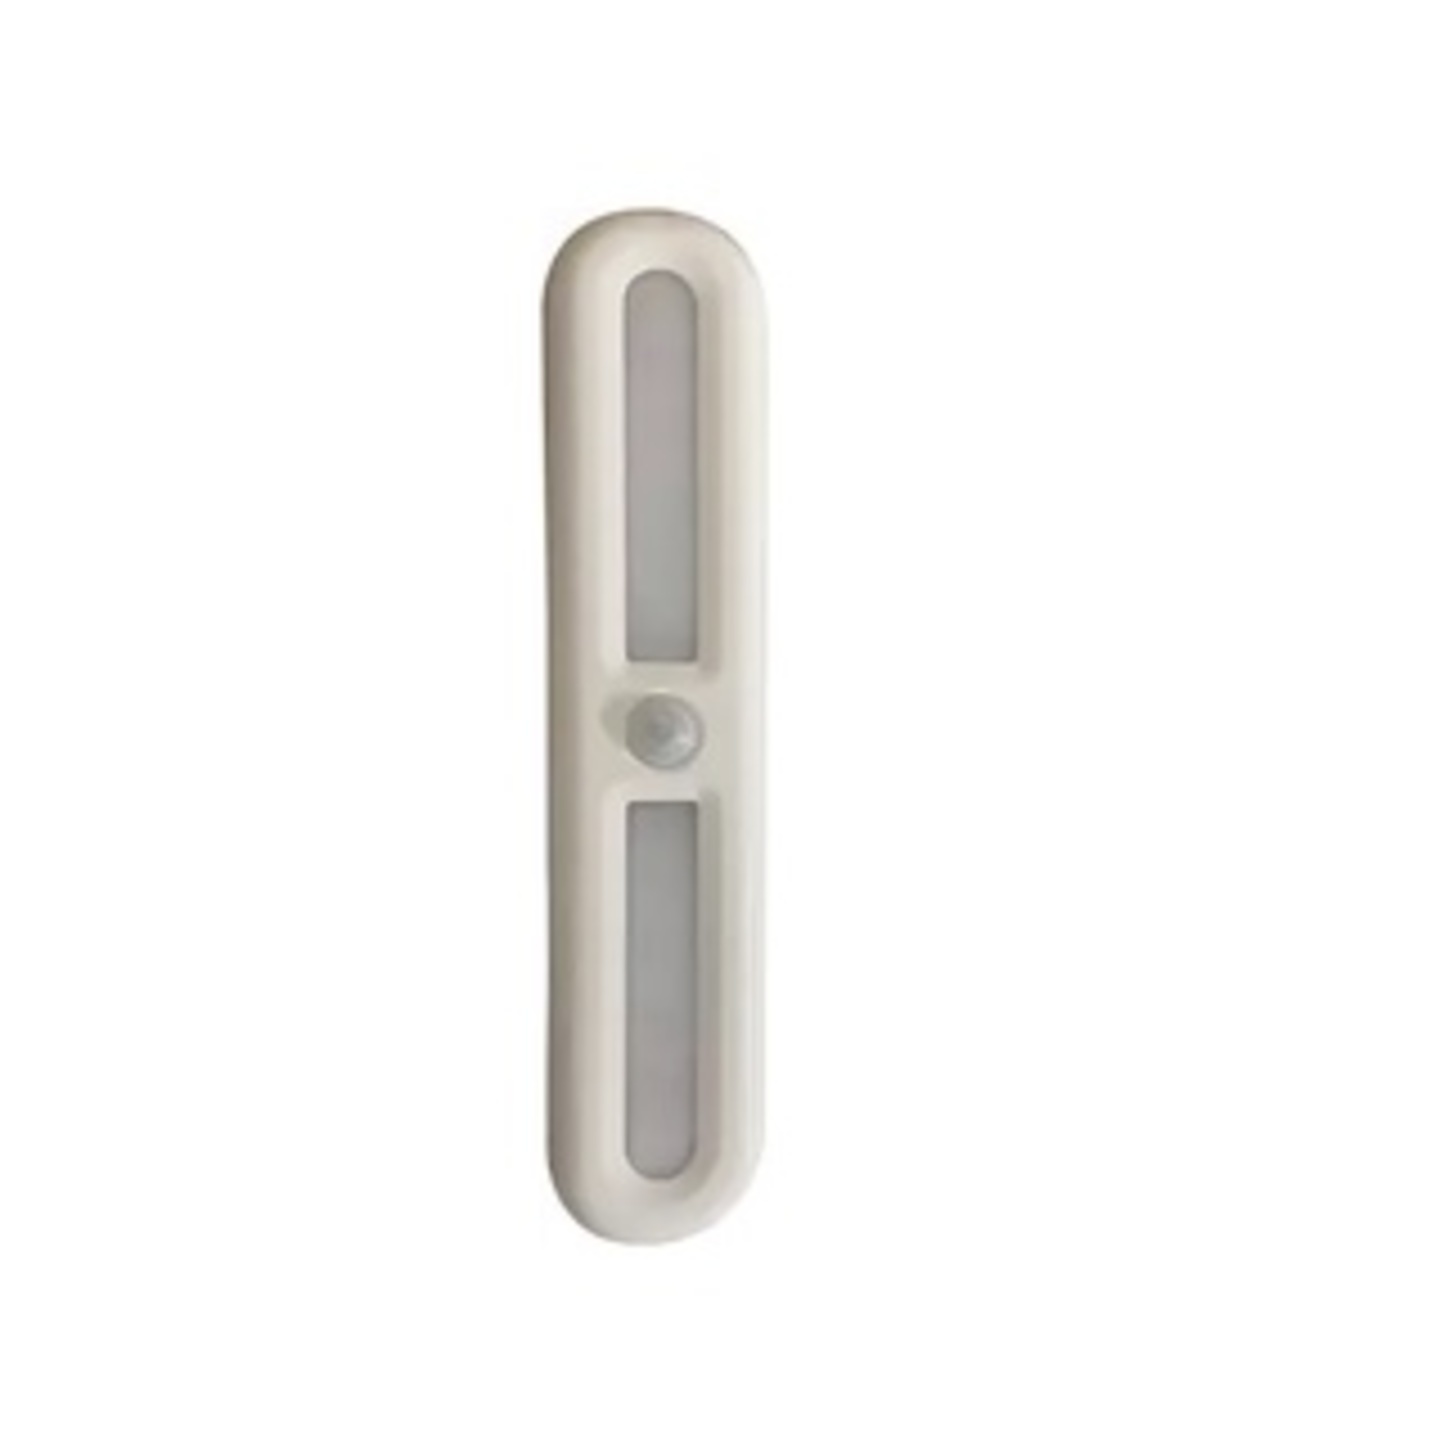 SAMYAKA PACK OF 1, LED Motion Sensor  10 LED, Wireless Battery Operated Night Light for Closet Cabinet Wardrobe Bar